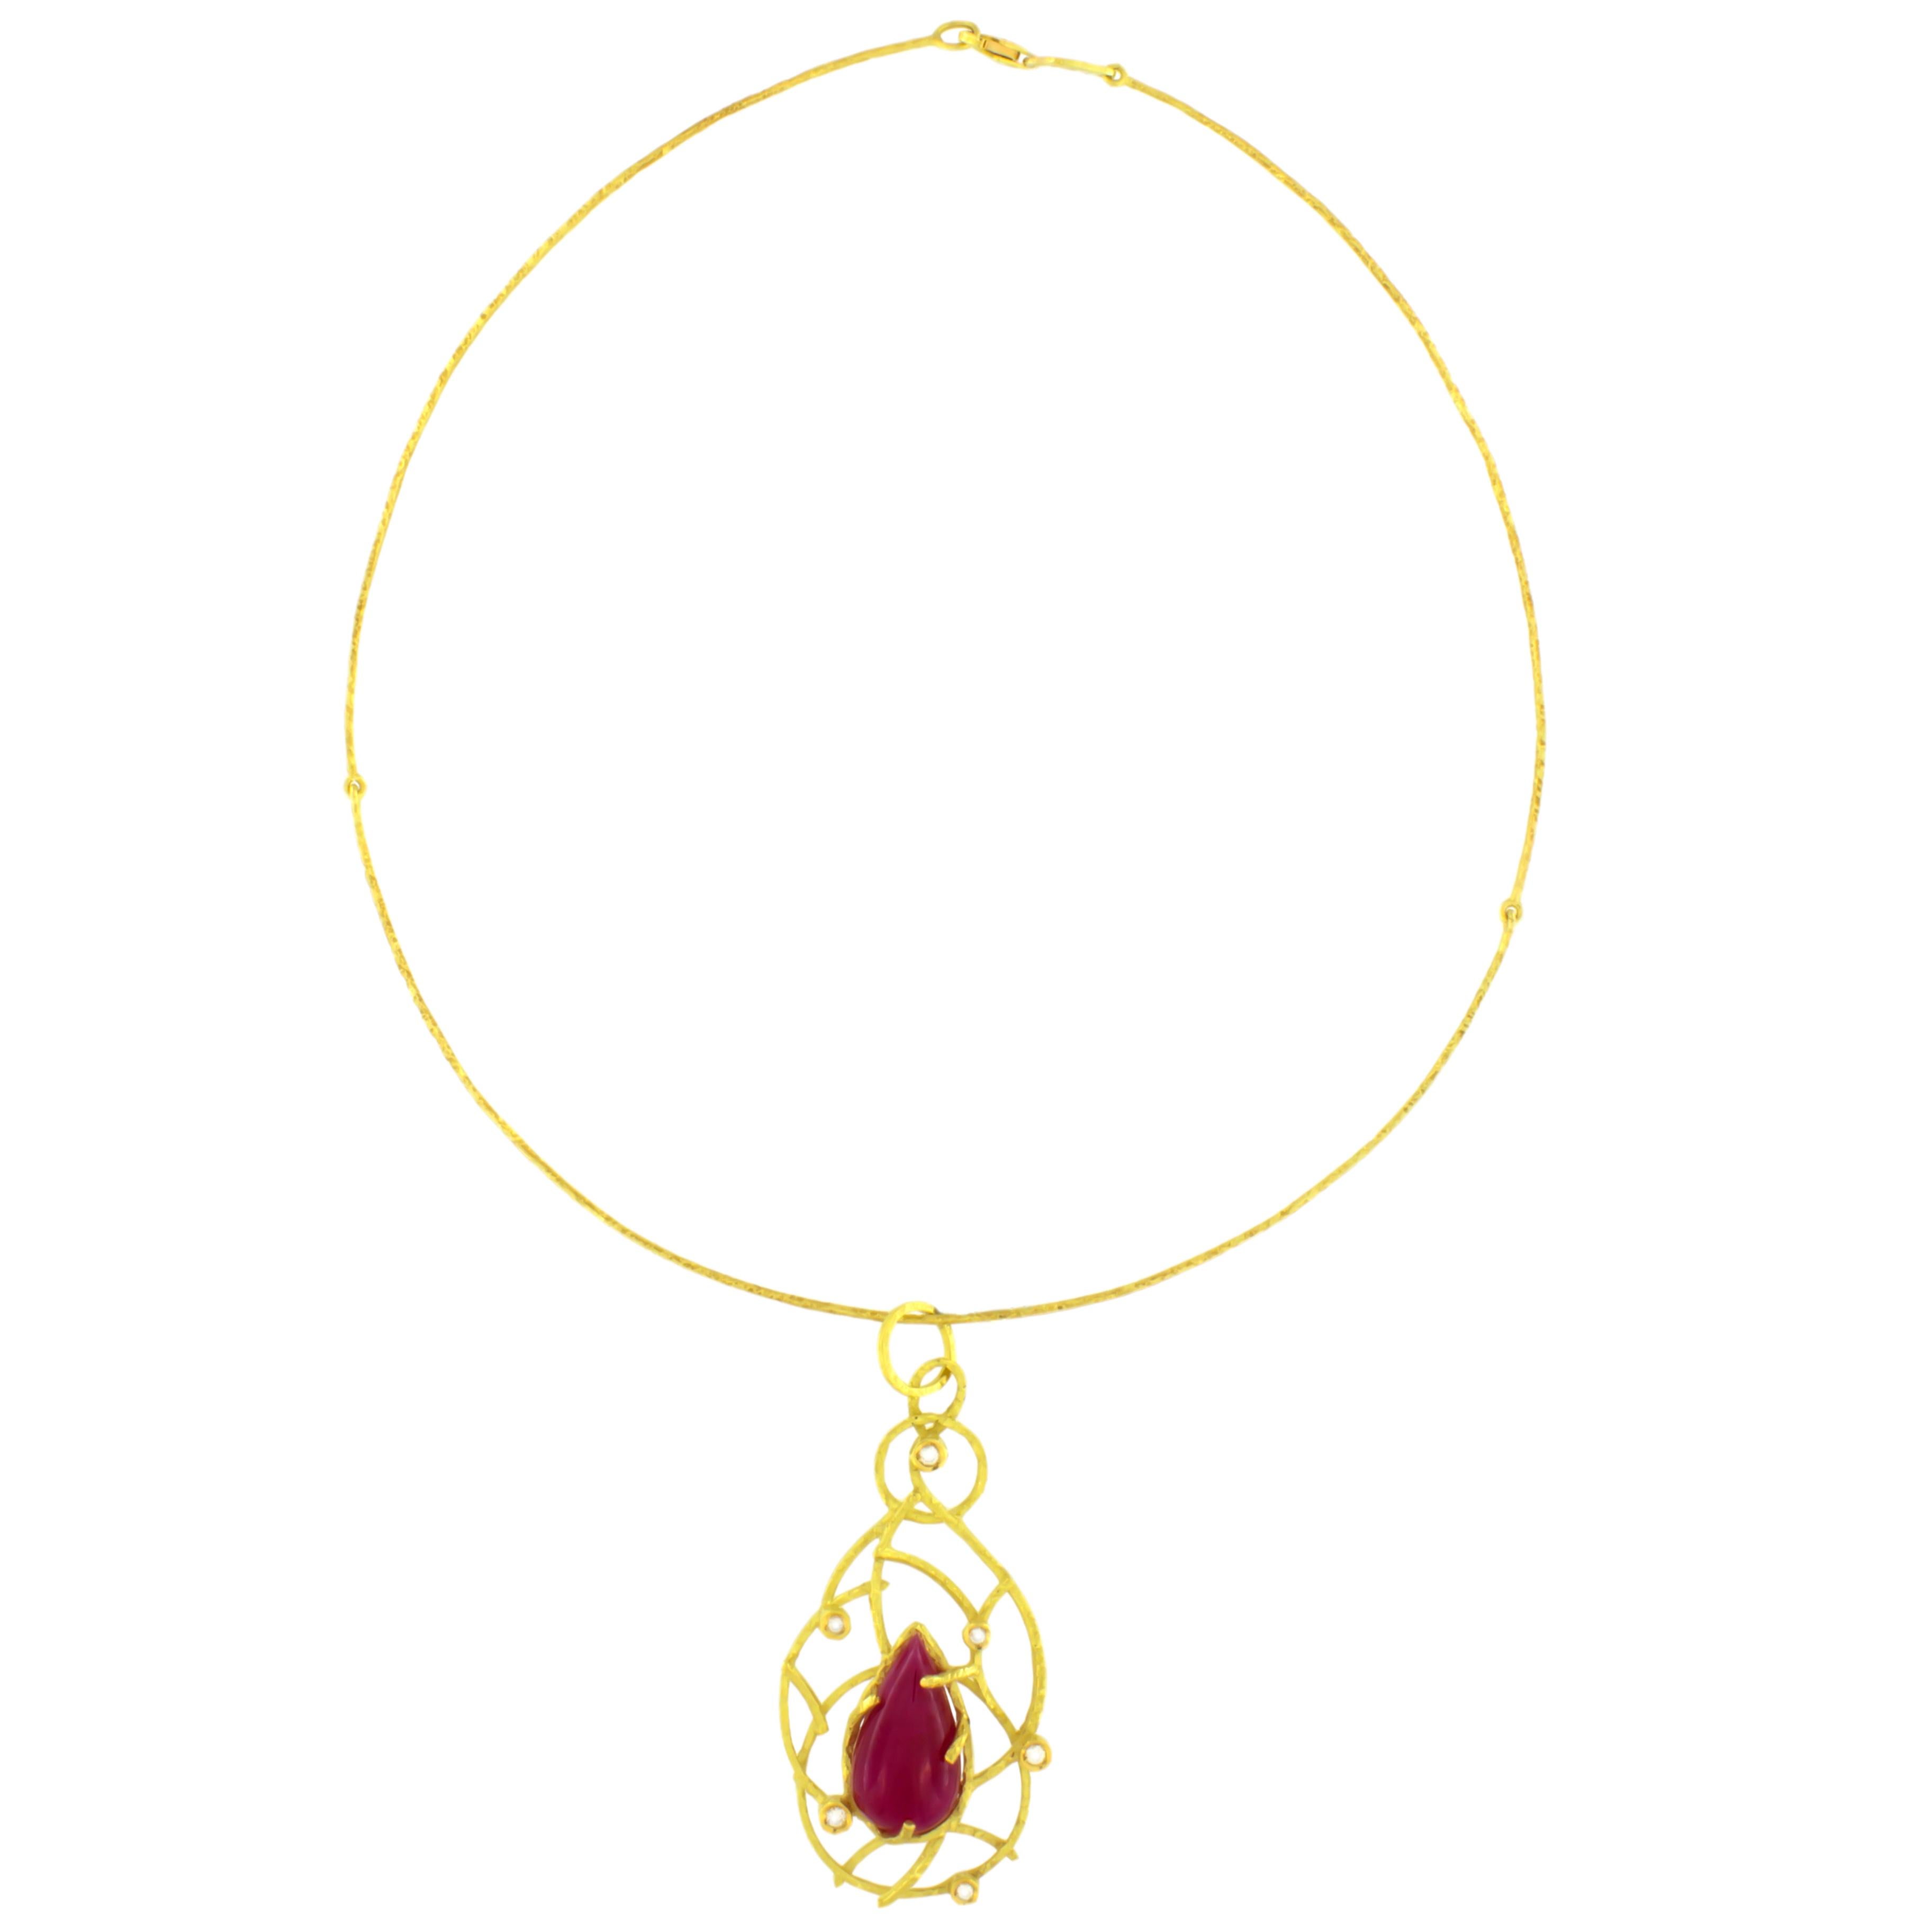 Contemporain Sacchi Collier pendentif en or 18 carats avec rubis de 14,5 carats et diamants en pierres précieuses en vente